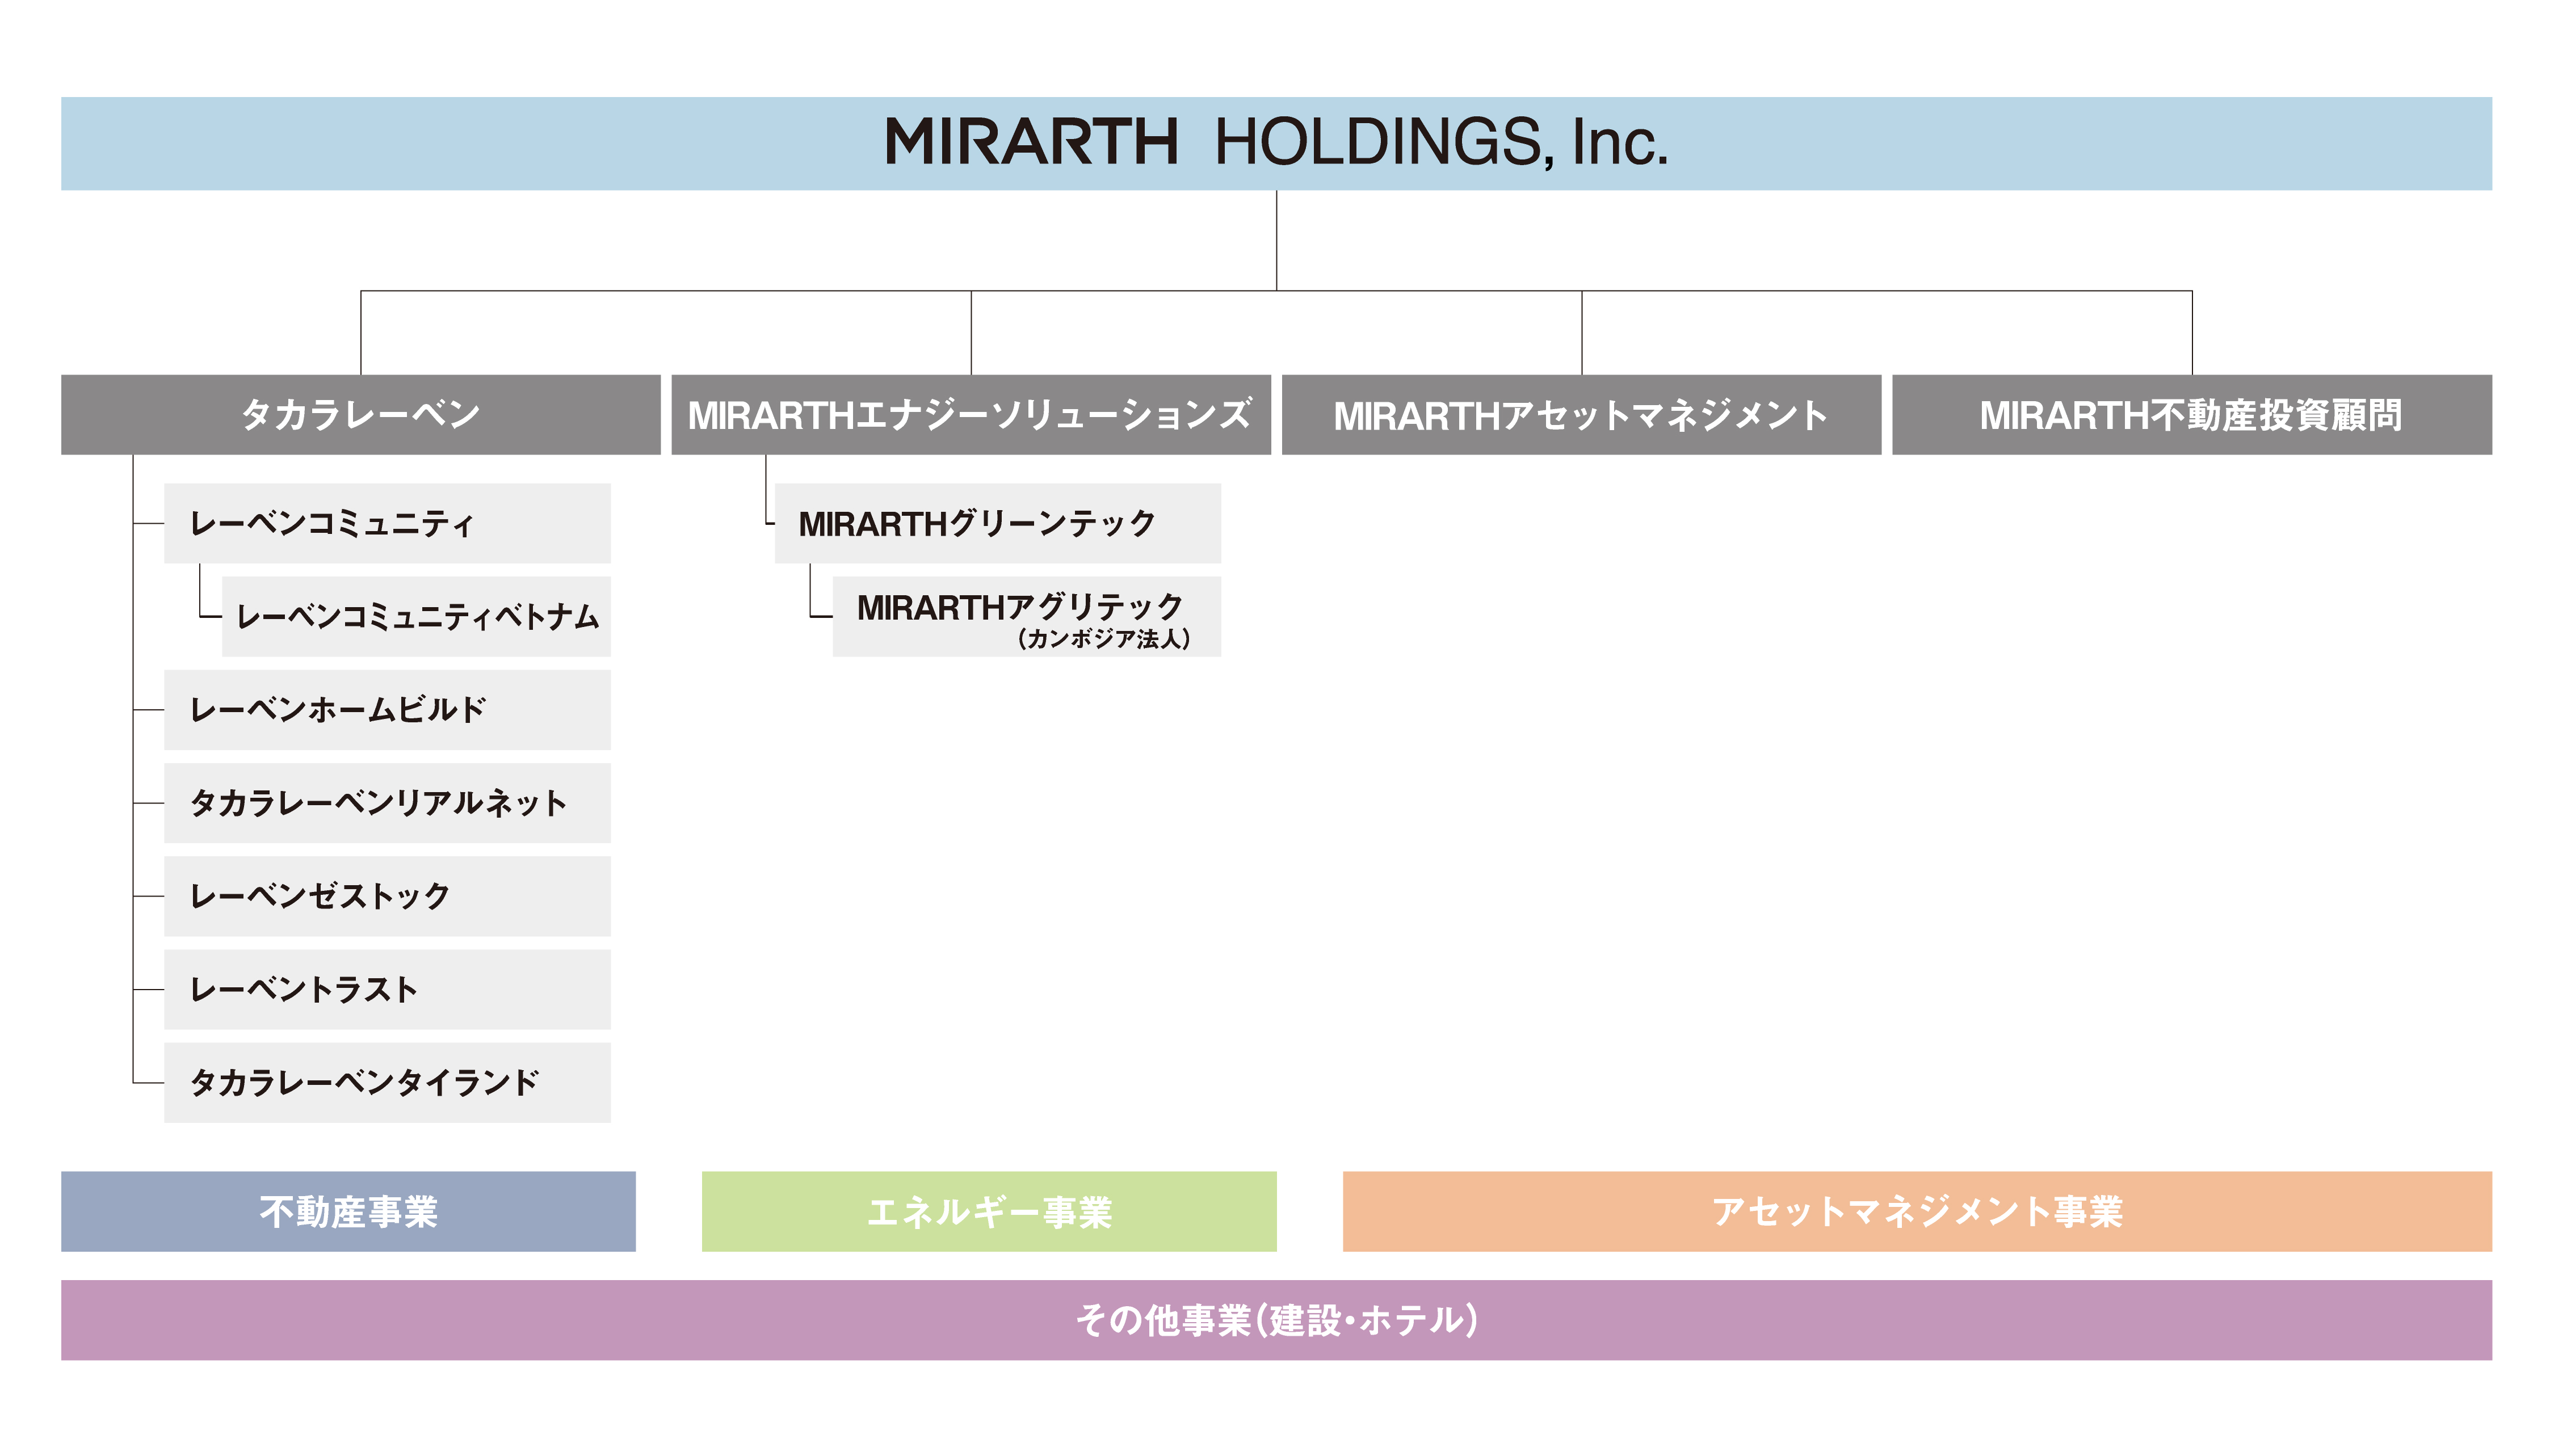  MIRARTHホールディングス株式会社組織図